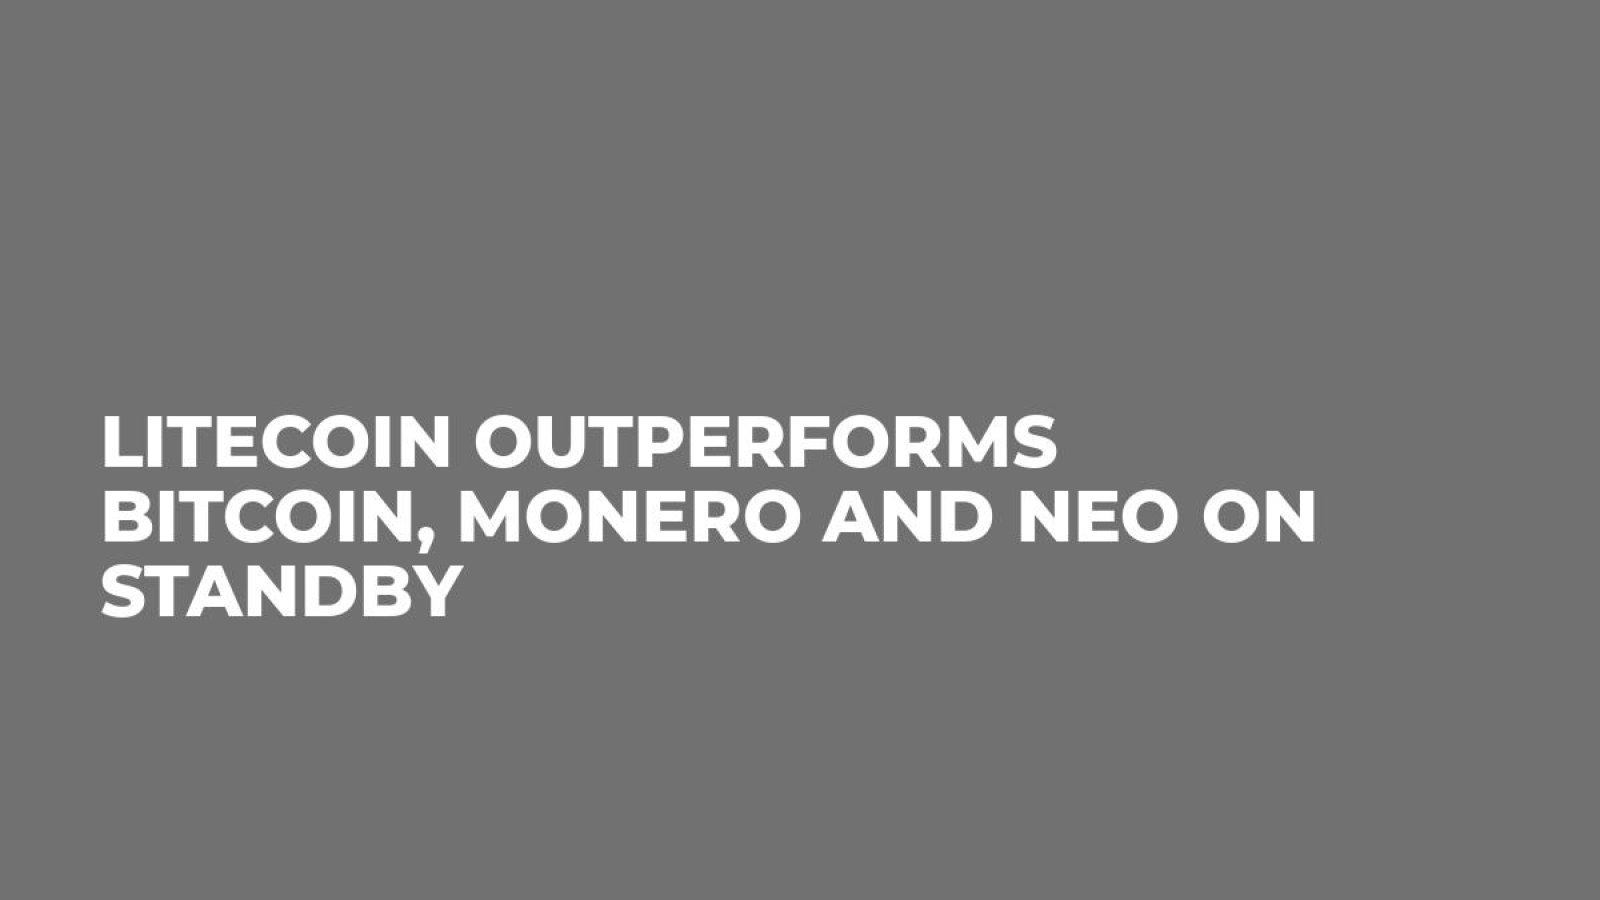 Litecoin Outperforms Bitcoin, Monero and NEO on Standby